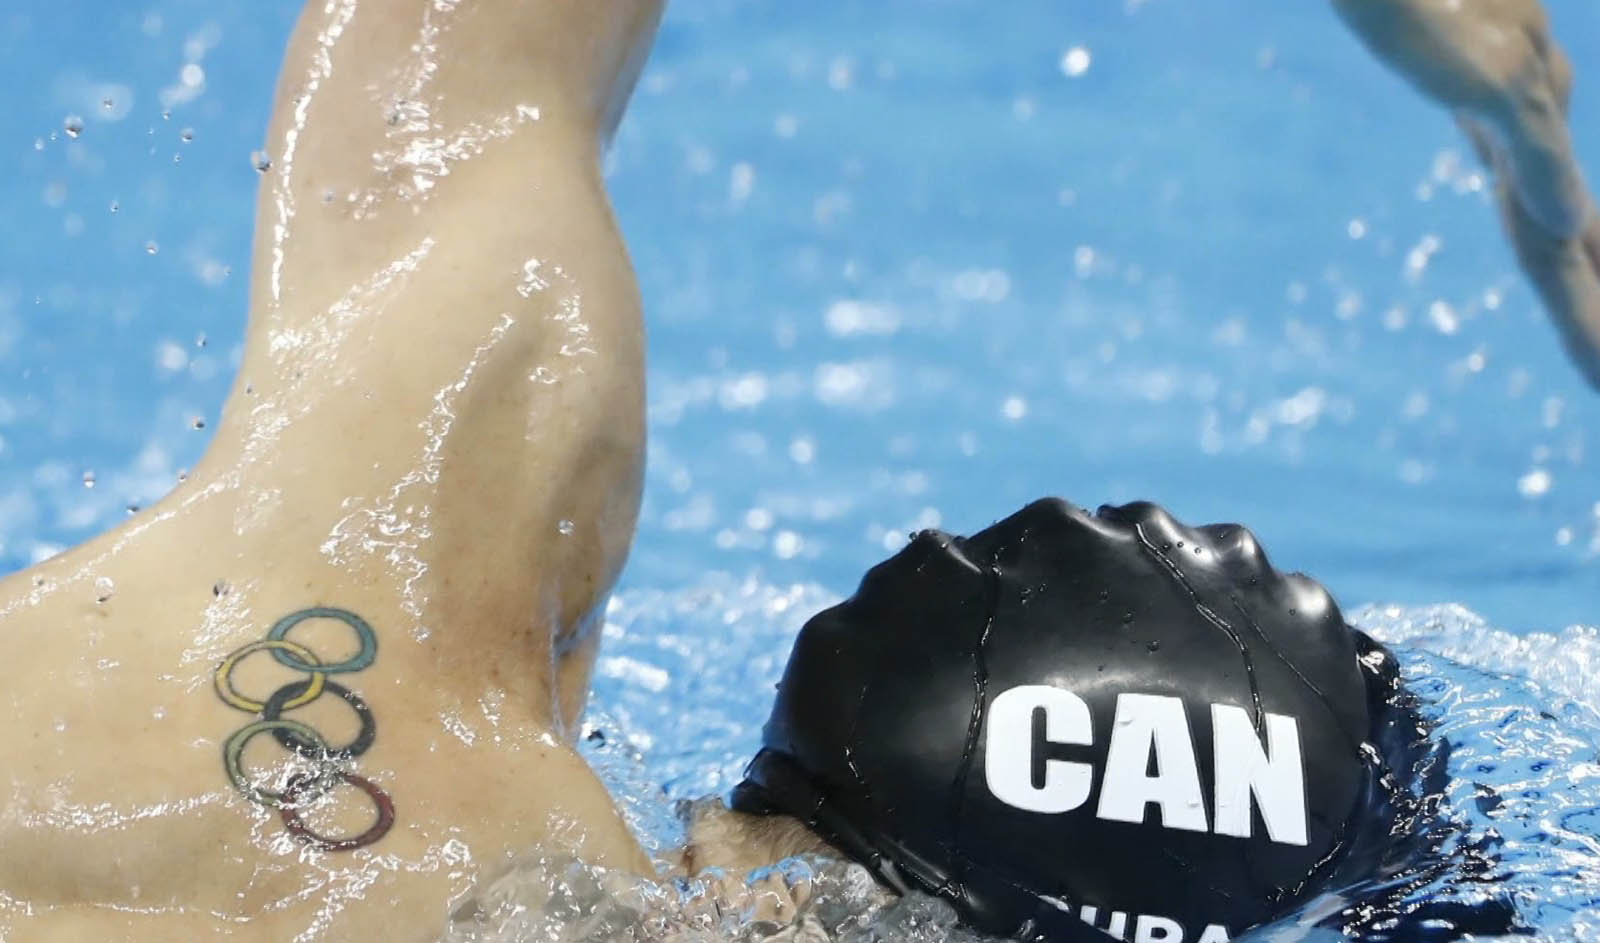 Olympic ring tattoos gain popularity